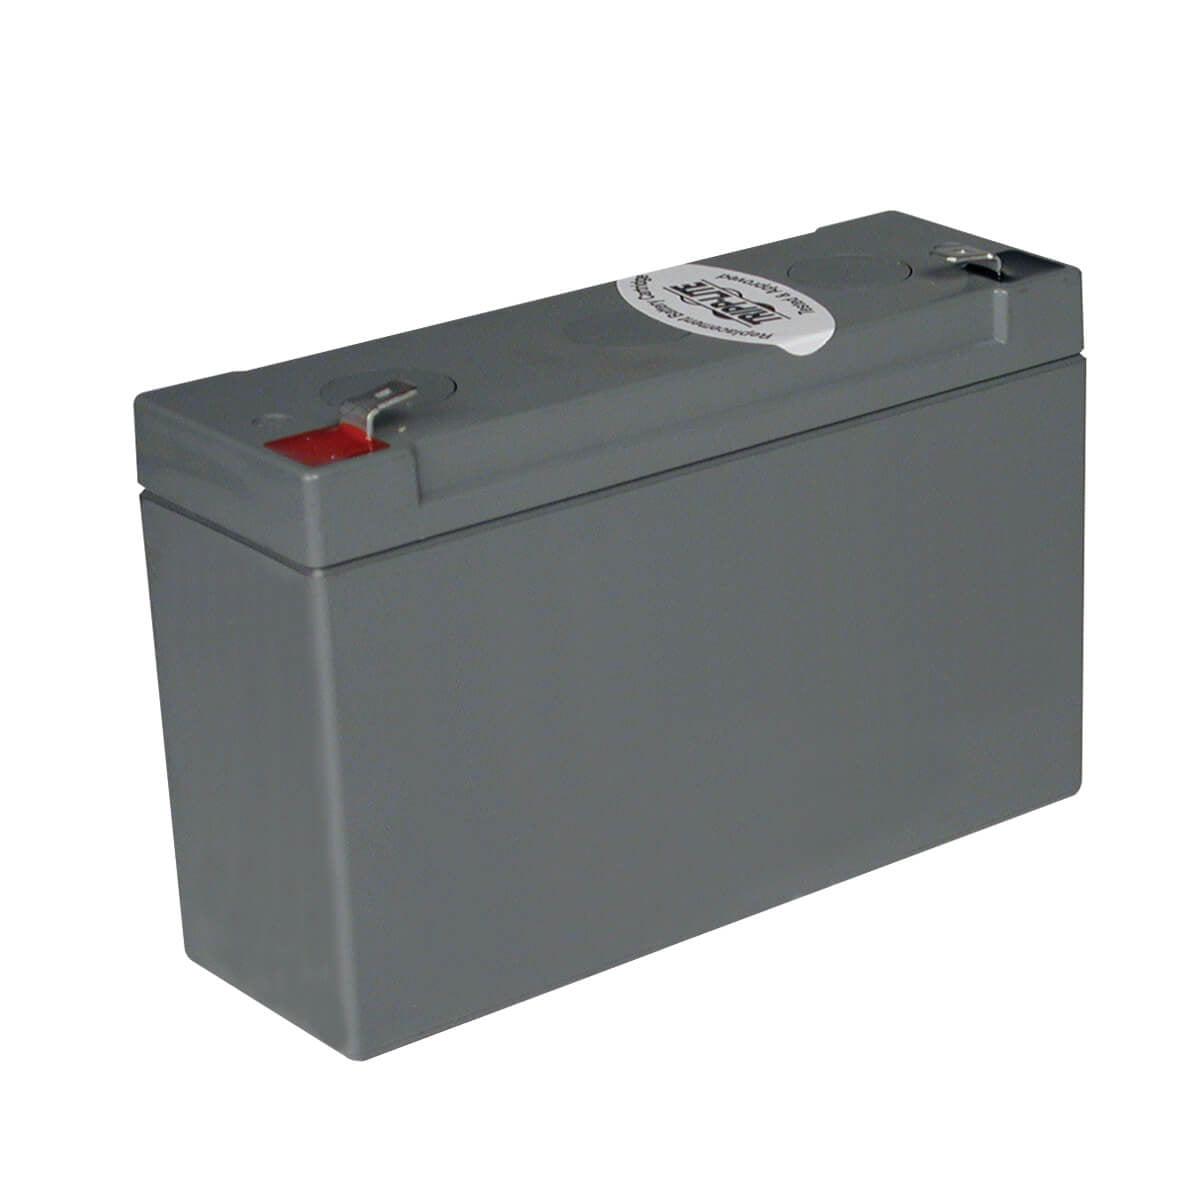 Tripp Lite Rbc52 Ups Replacement Battery Cartridge For Select , Best, Liebert, Minuteman And Other Ups